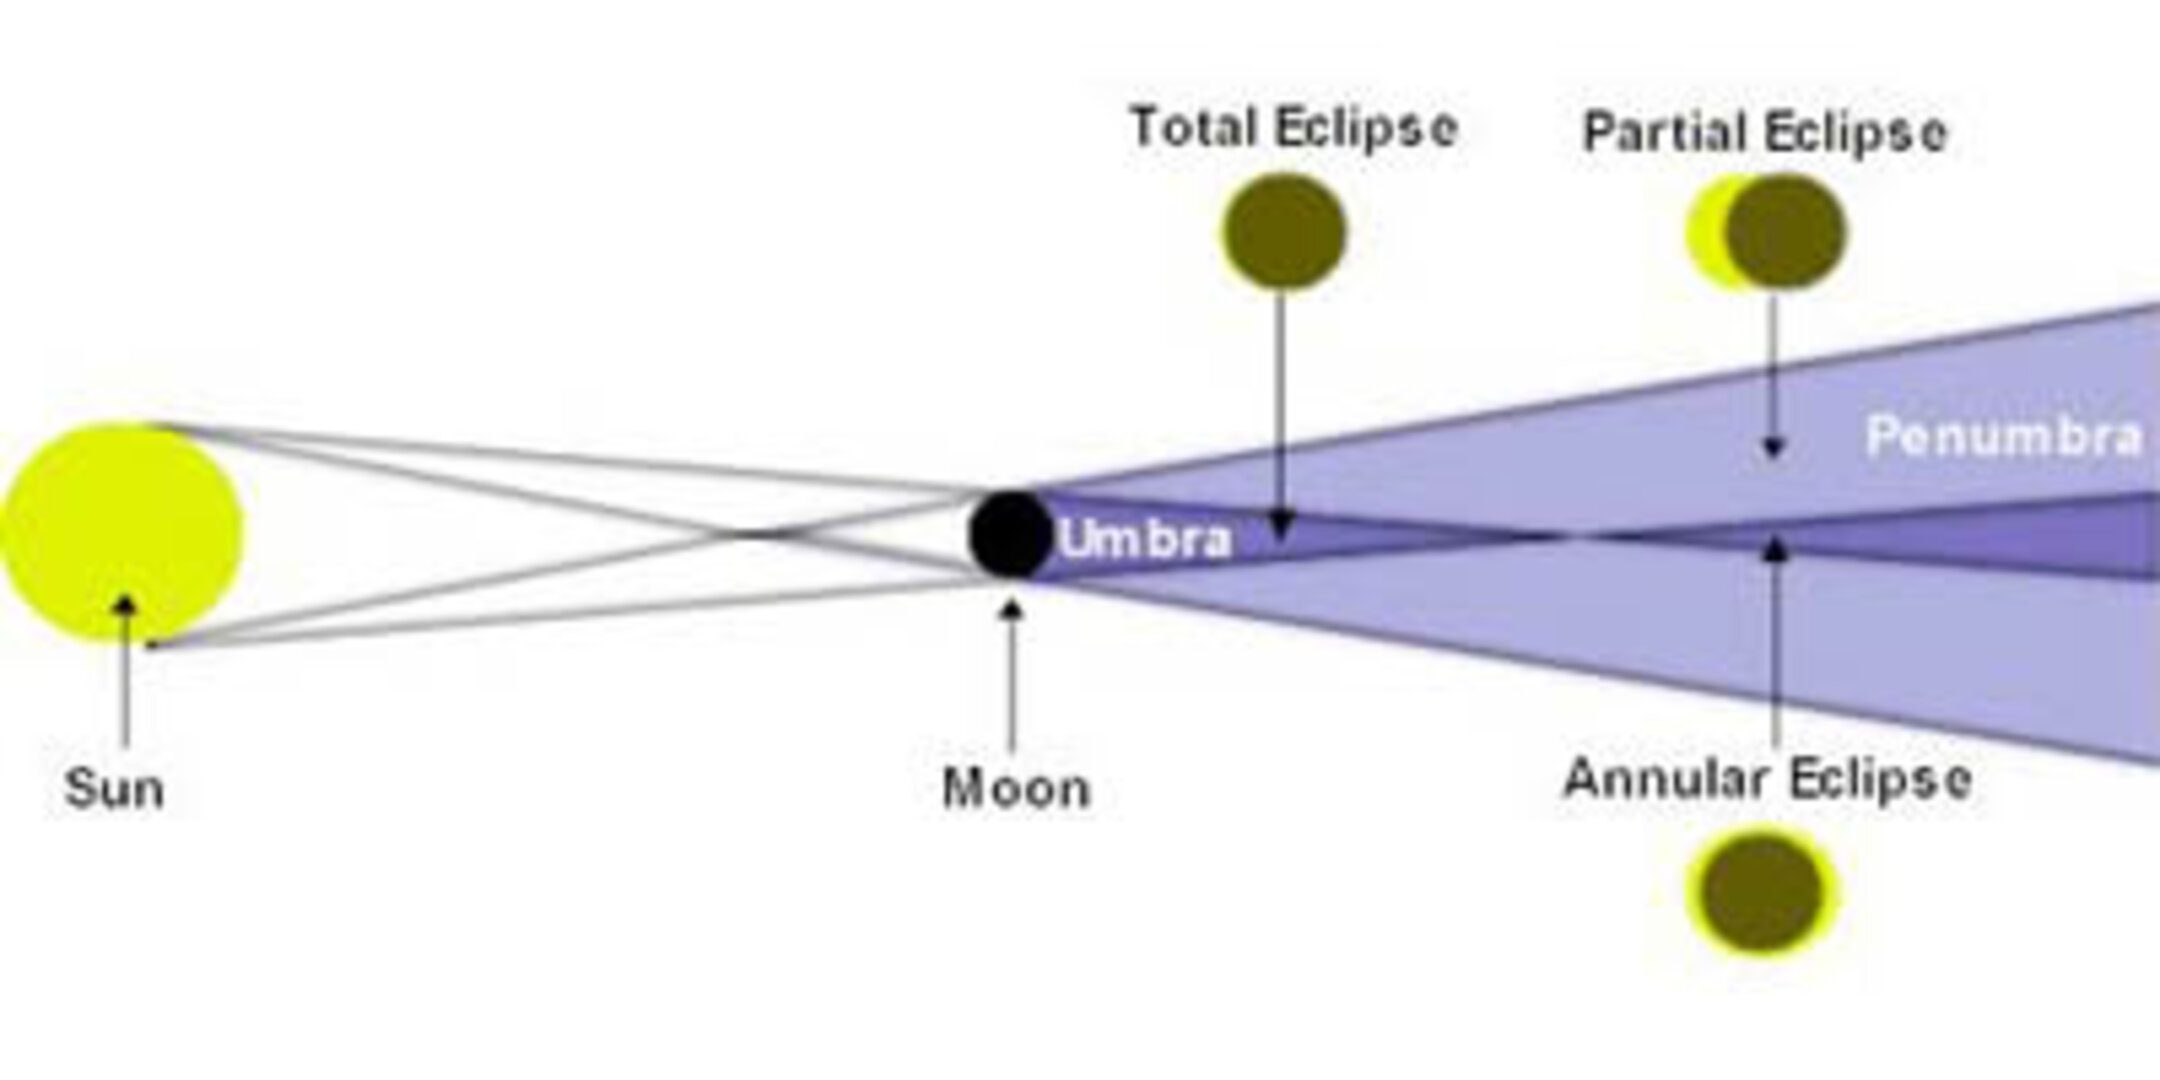 Eclipse types